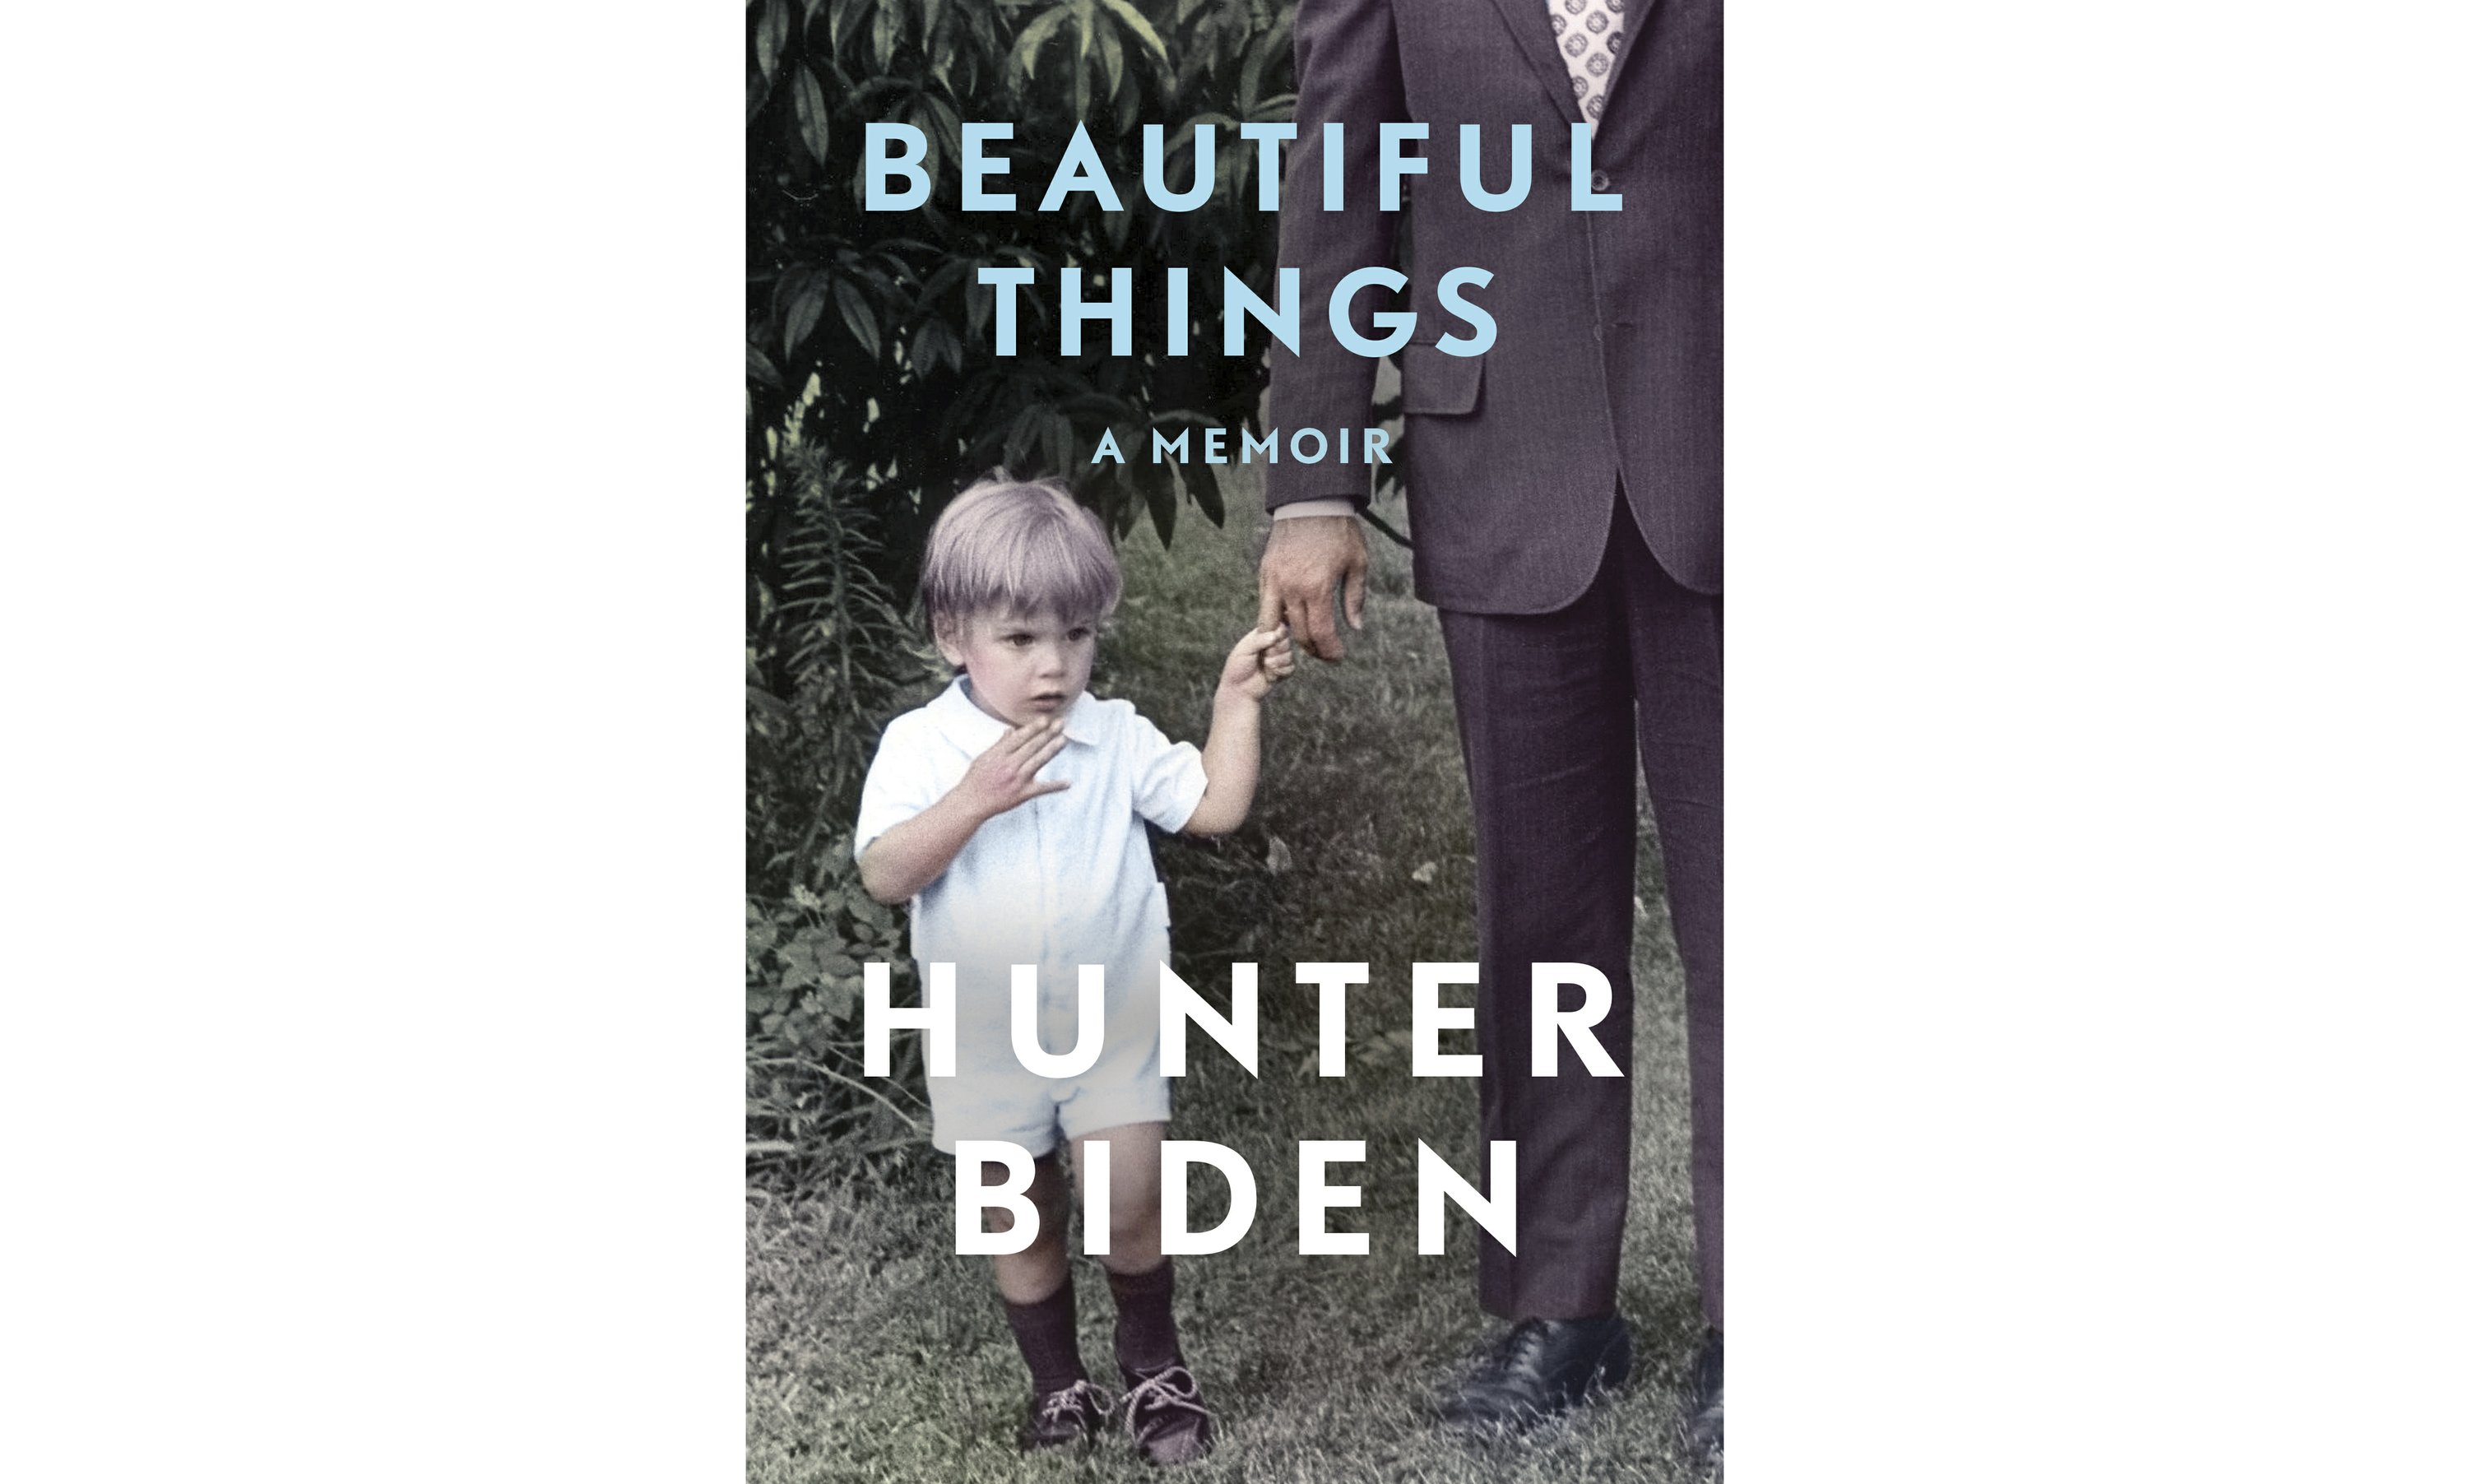 Hunter Biden’s memories, ‘Beautiful Things’, will be released in April